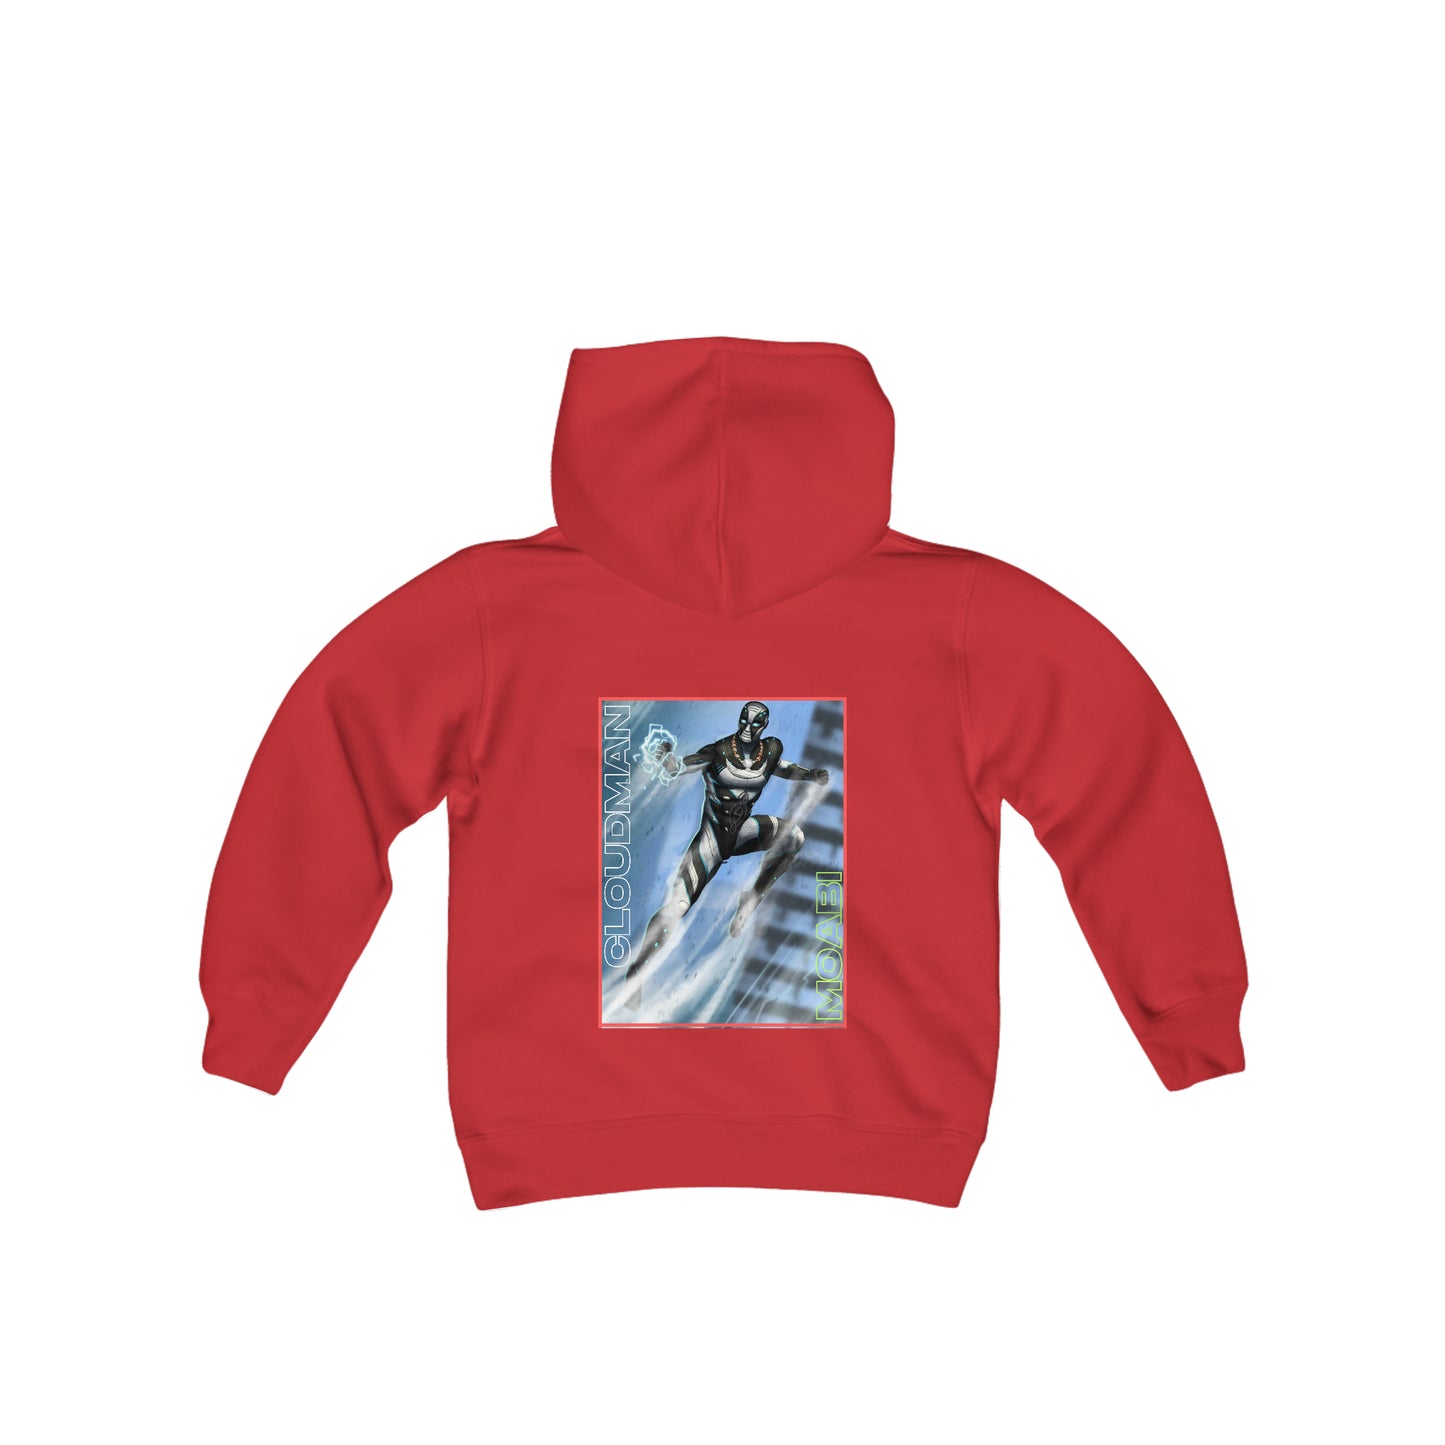 Cloudman  - Boys - Heavy Blend Hooded Sweatshirt  -  Front & Back designs